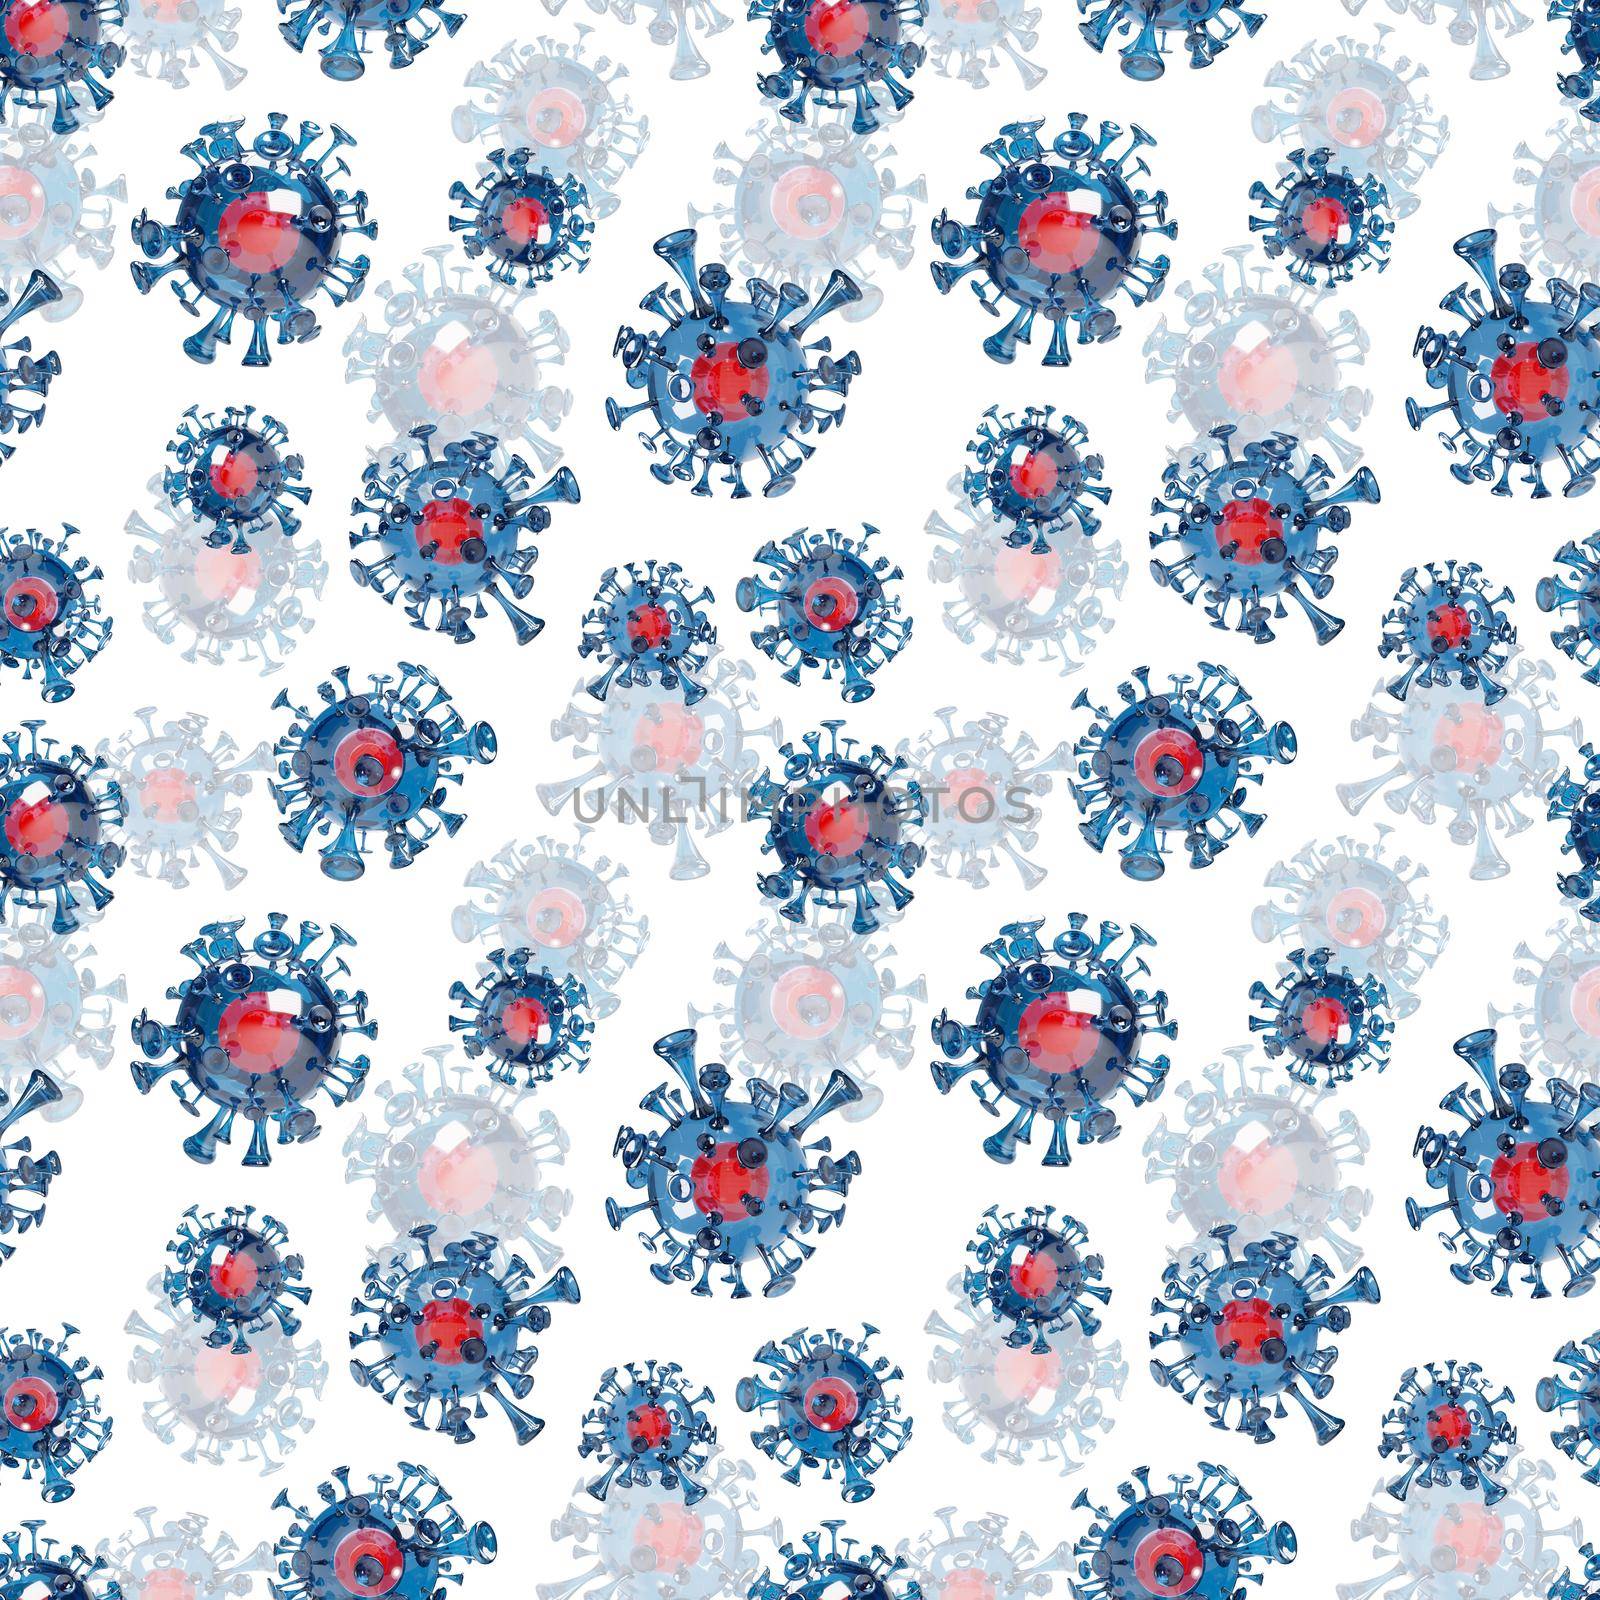 Seamless 3d abstract scientific corona virus pattern by kisika